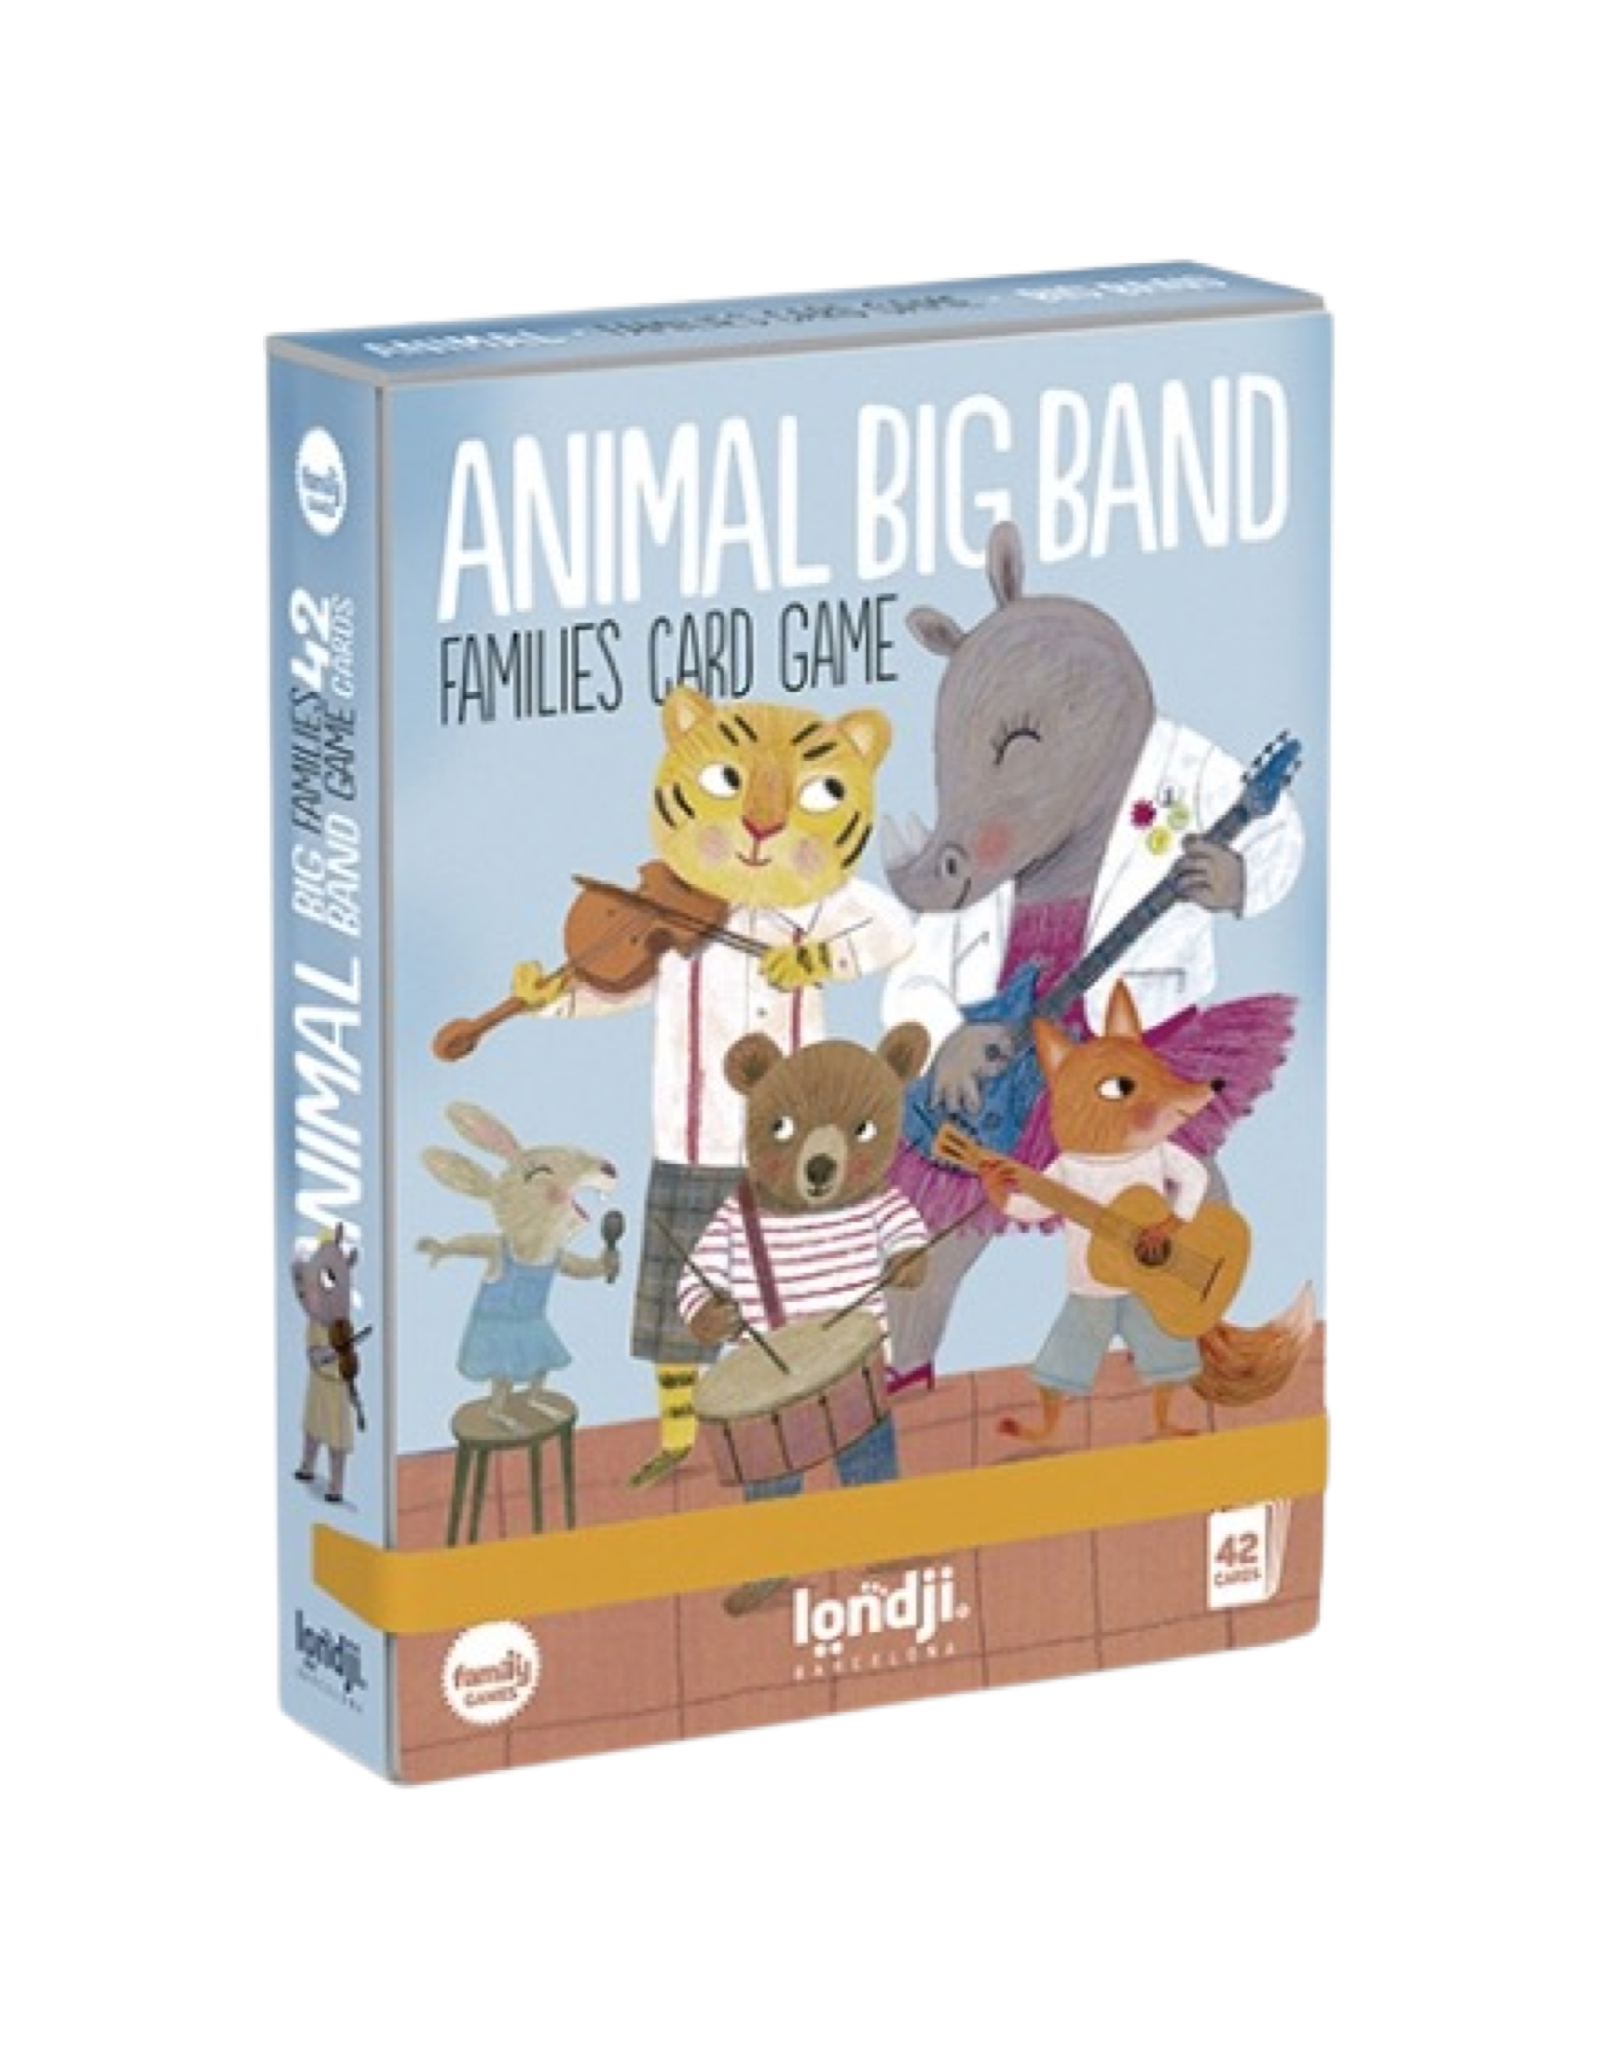 Londji Animal Big Band Families Card Game